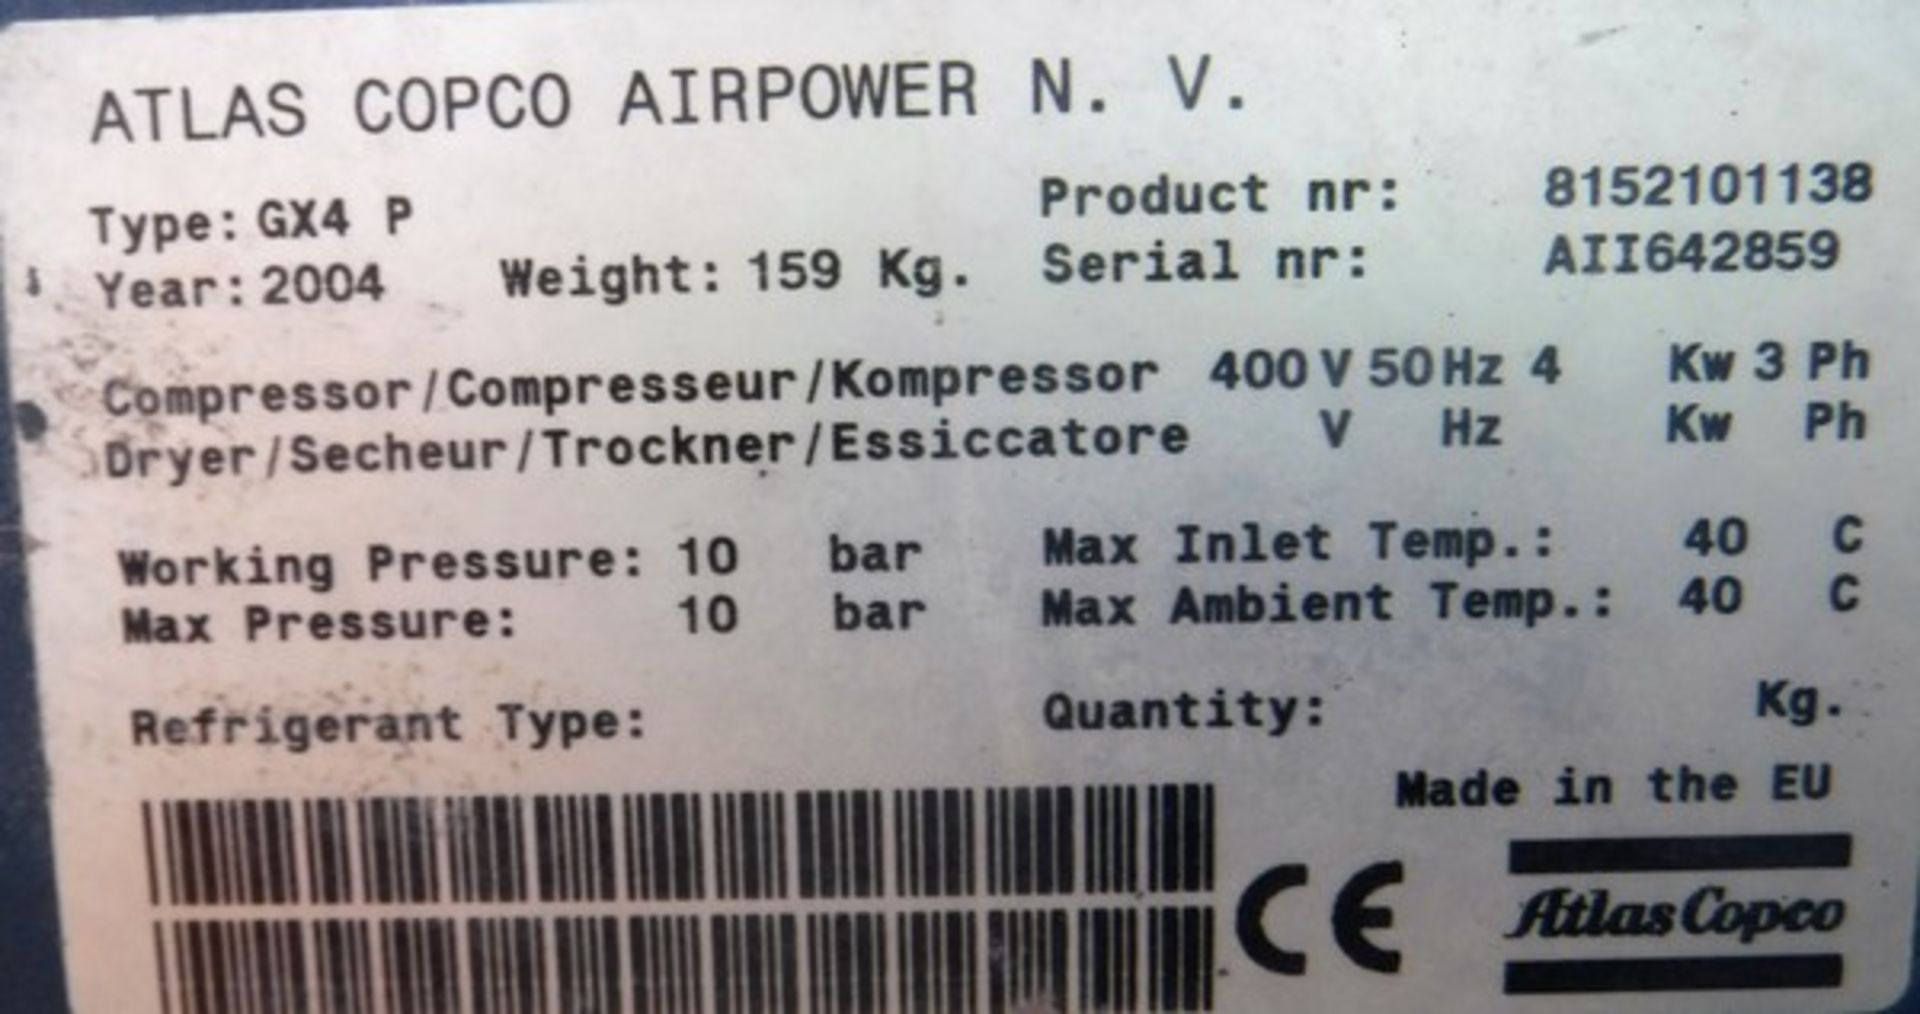 2004 ATLAS COPCO GX4 compressor s/n AII642859 - Bild 2 aus 4